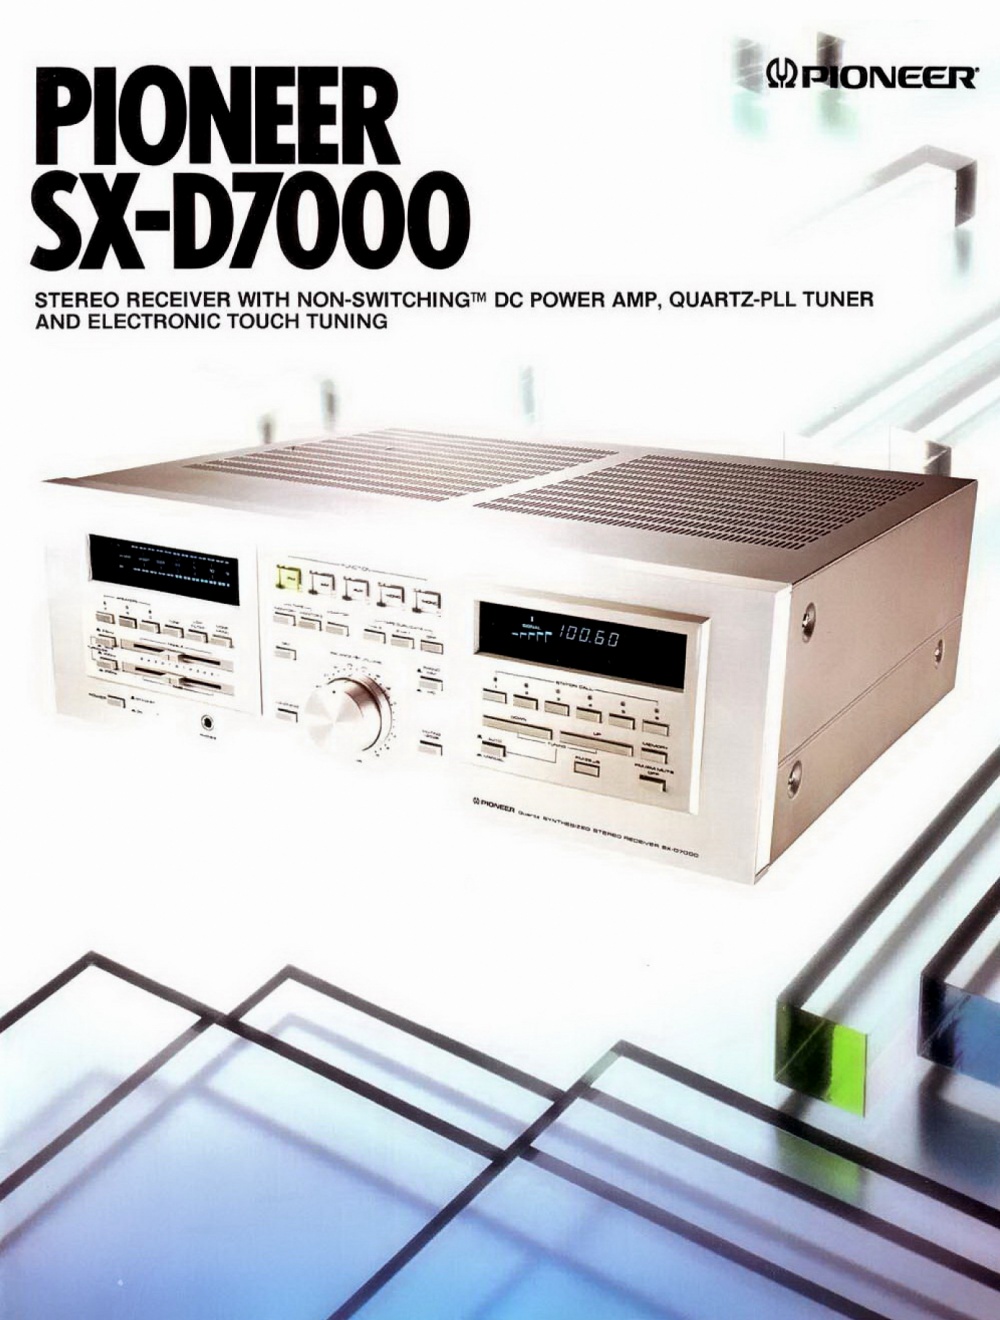 Pioneer SX-D 7000-Prospekt-1.jpg